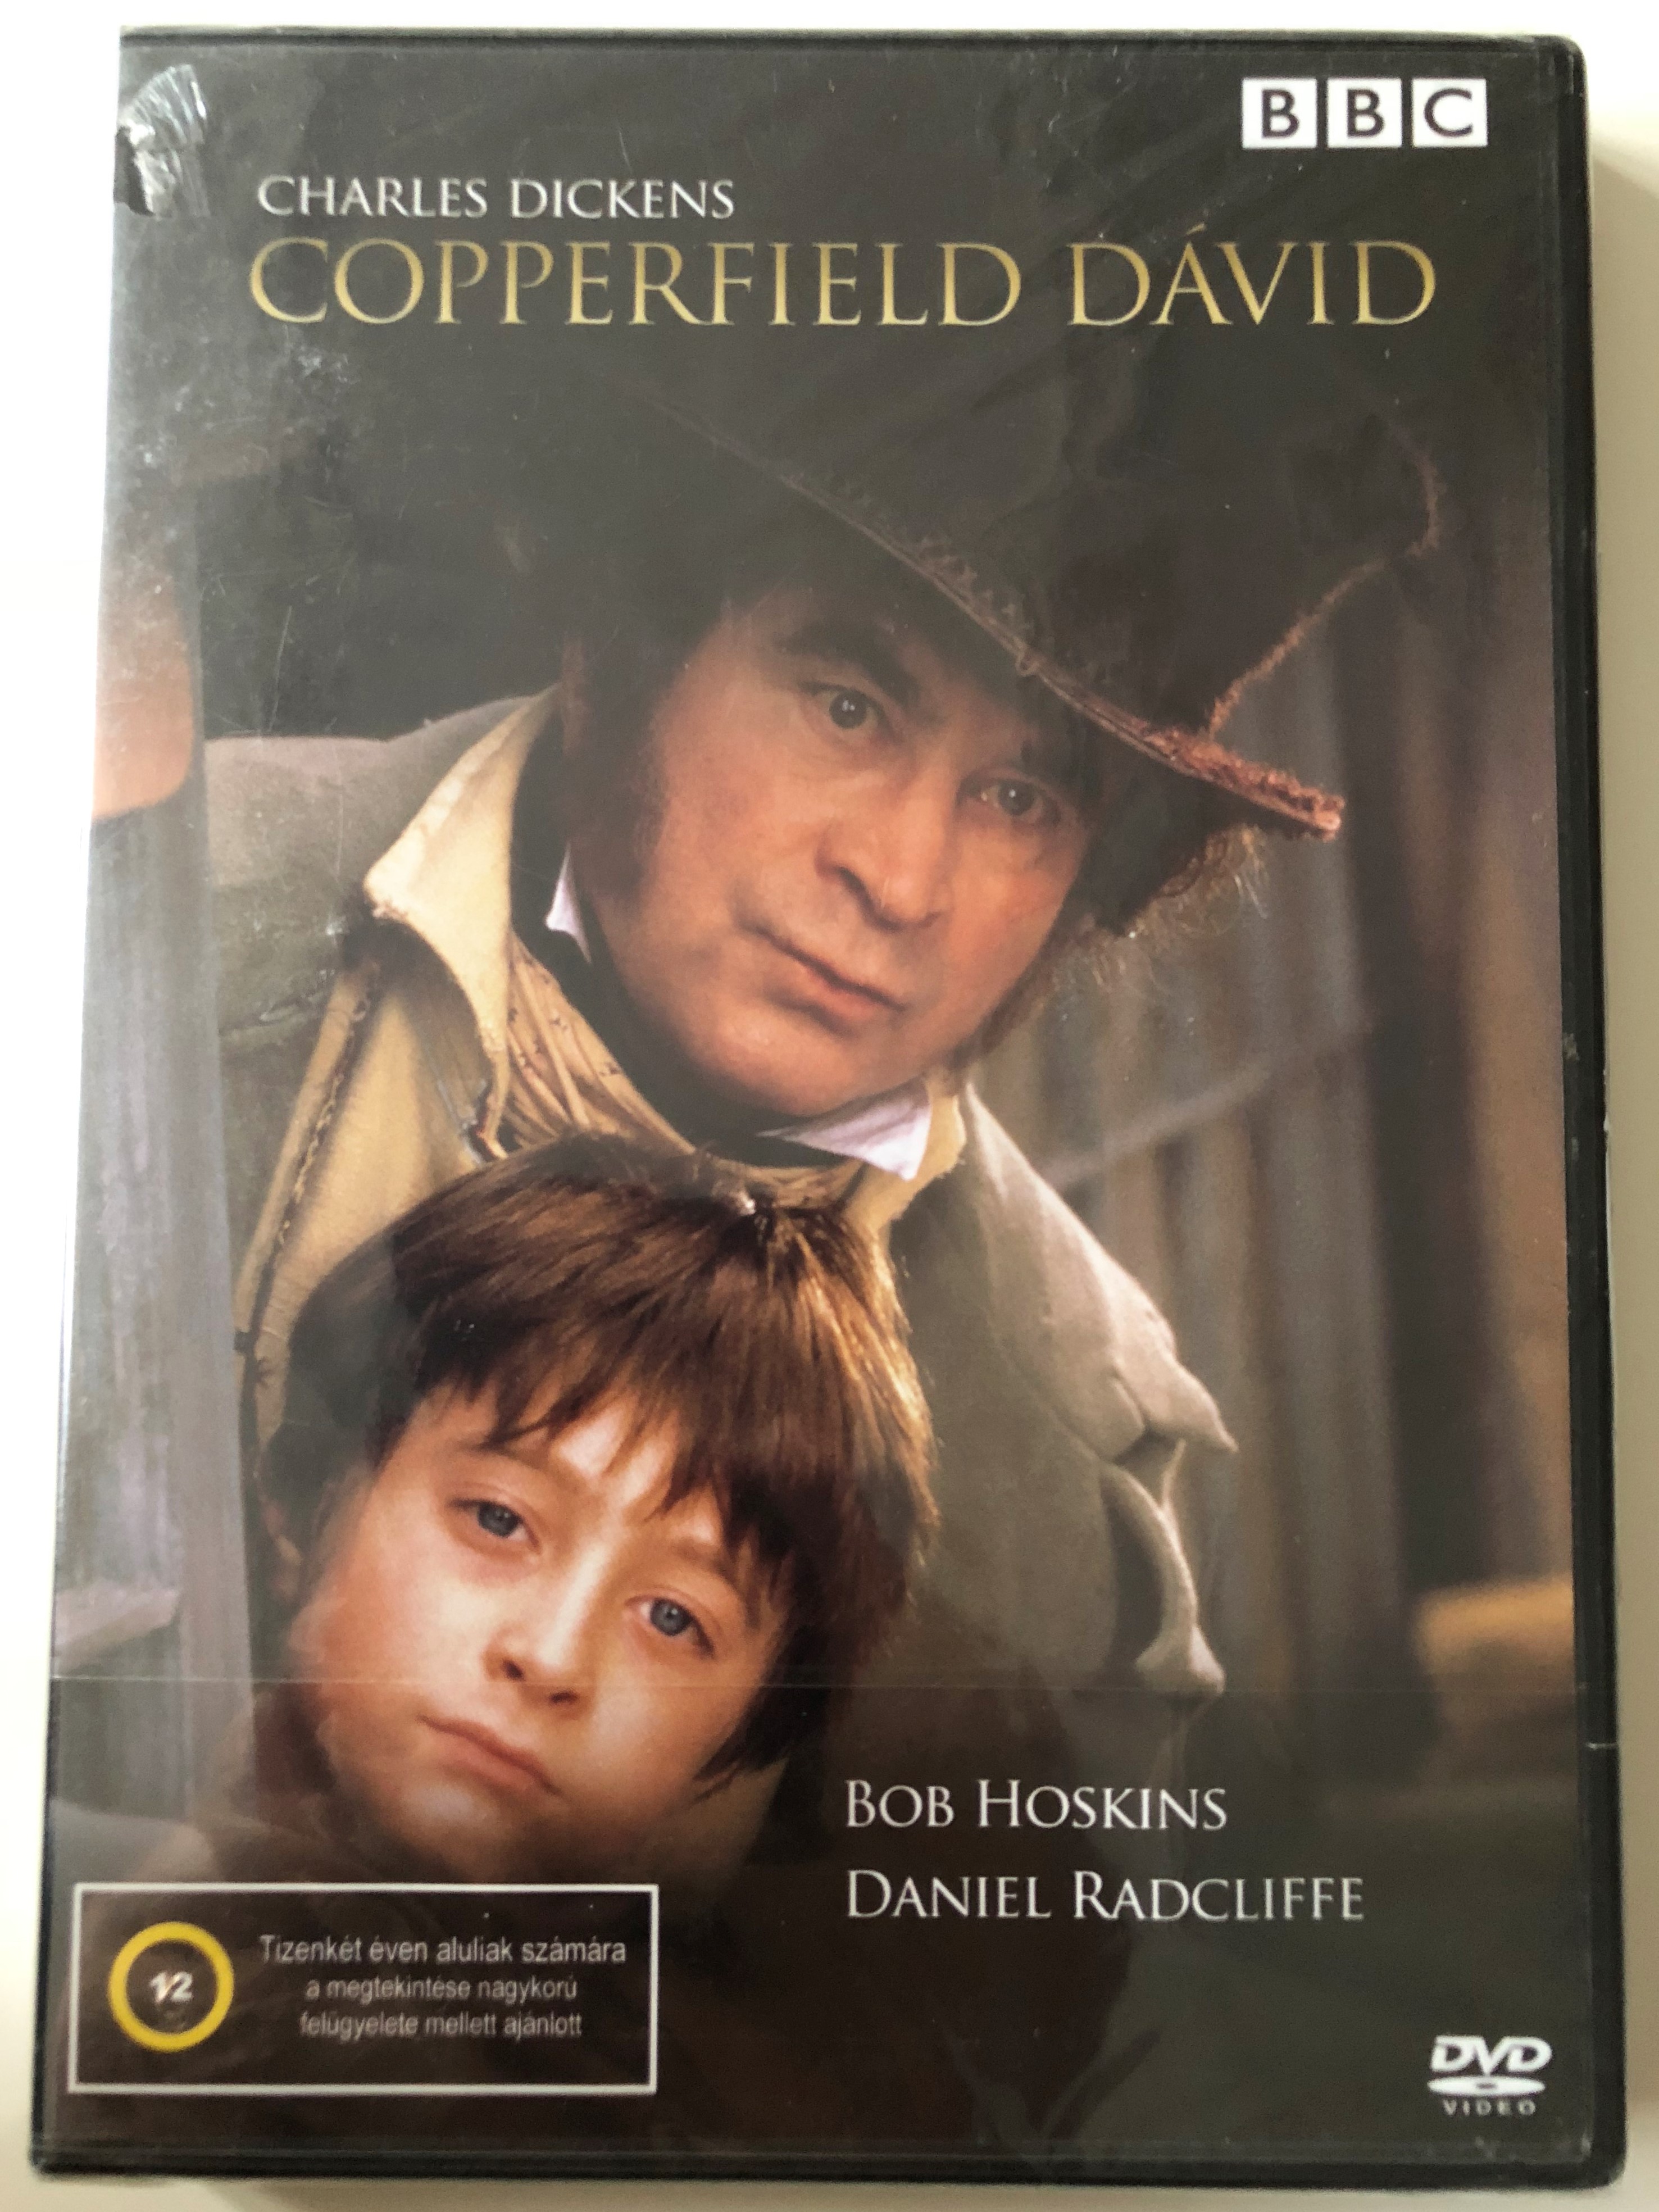 bbc-charles-dikens-david-copperfield-dvd-1999-copperfield-d-vid-directed-by-simon-curtis-starring-bob-hoskins-daniel-radcliffe-1-.jpg